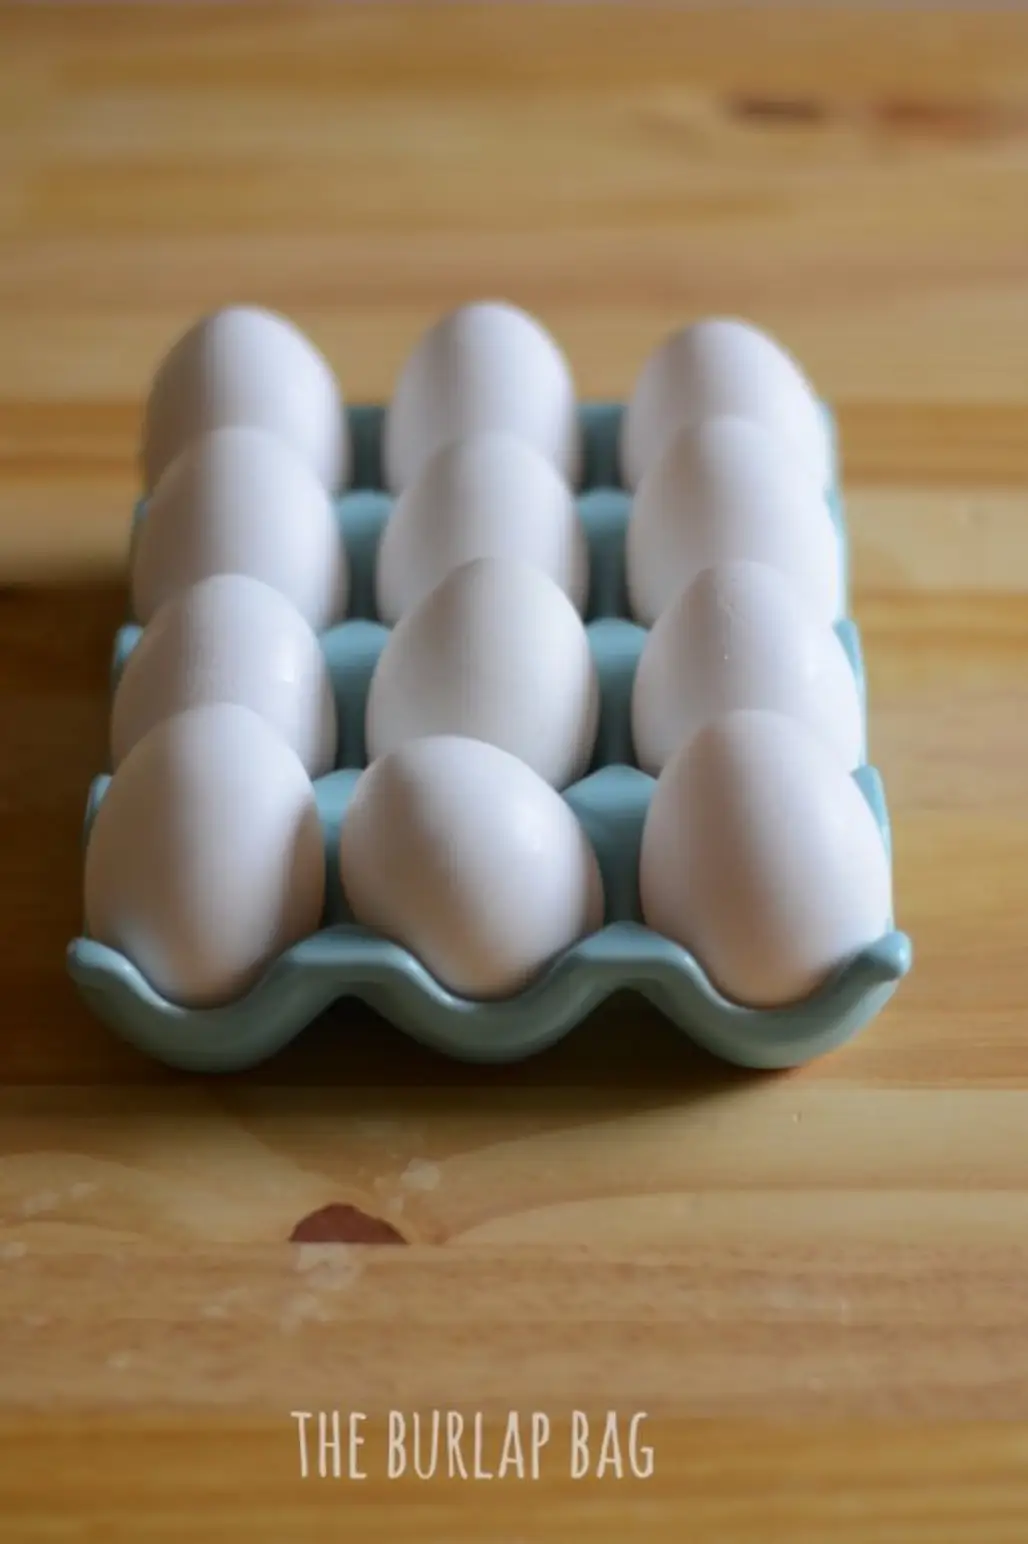 Hardboiled Eggs and a Granola Bar